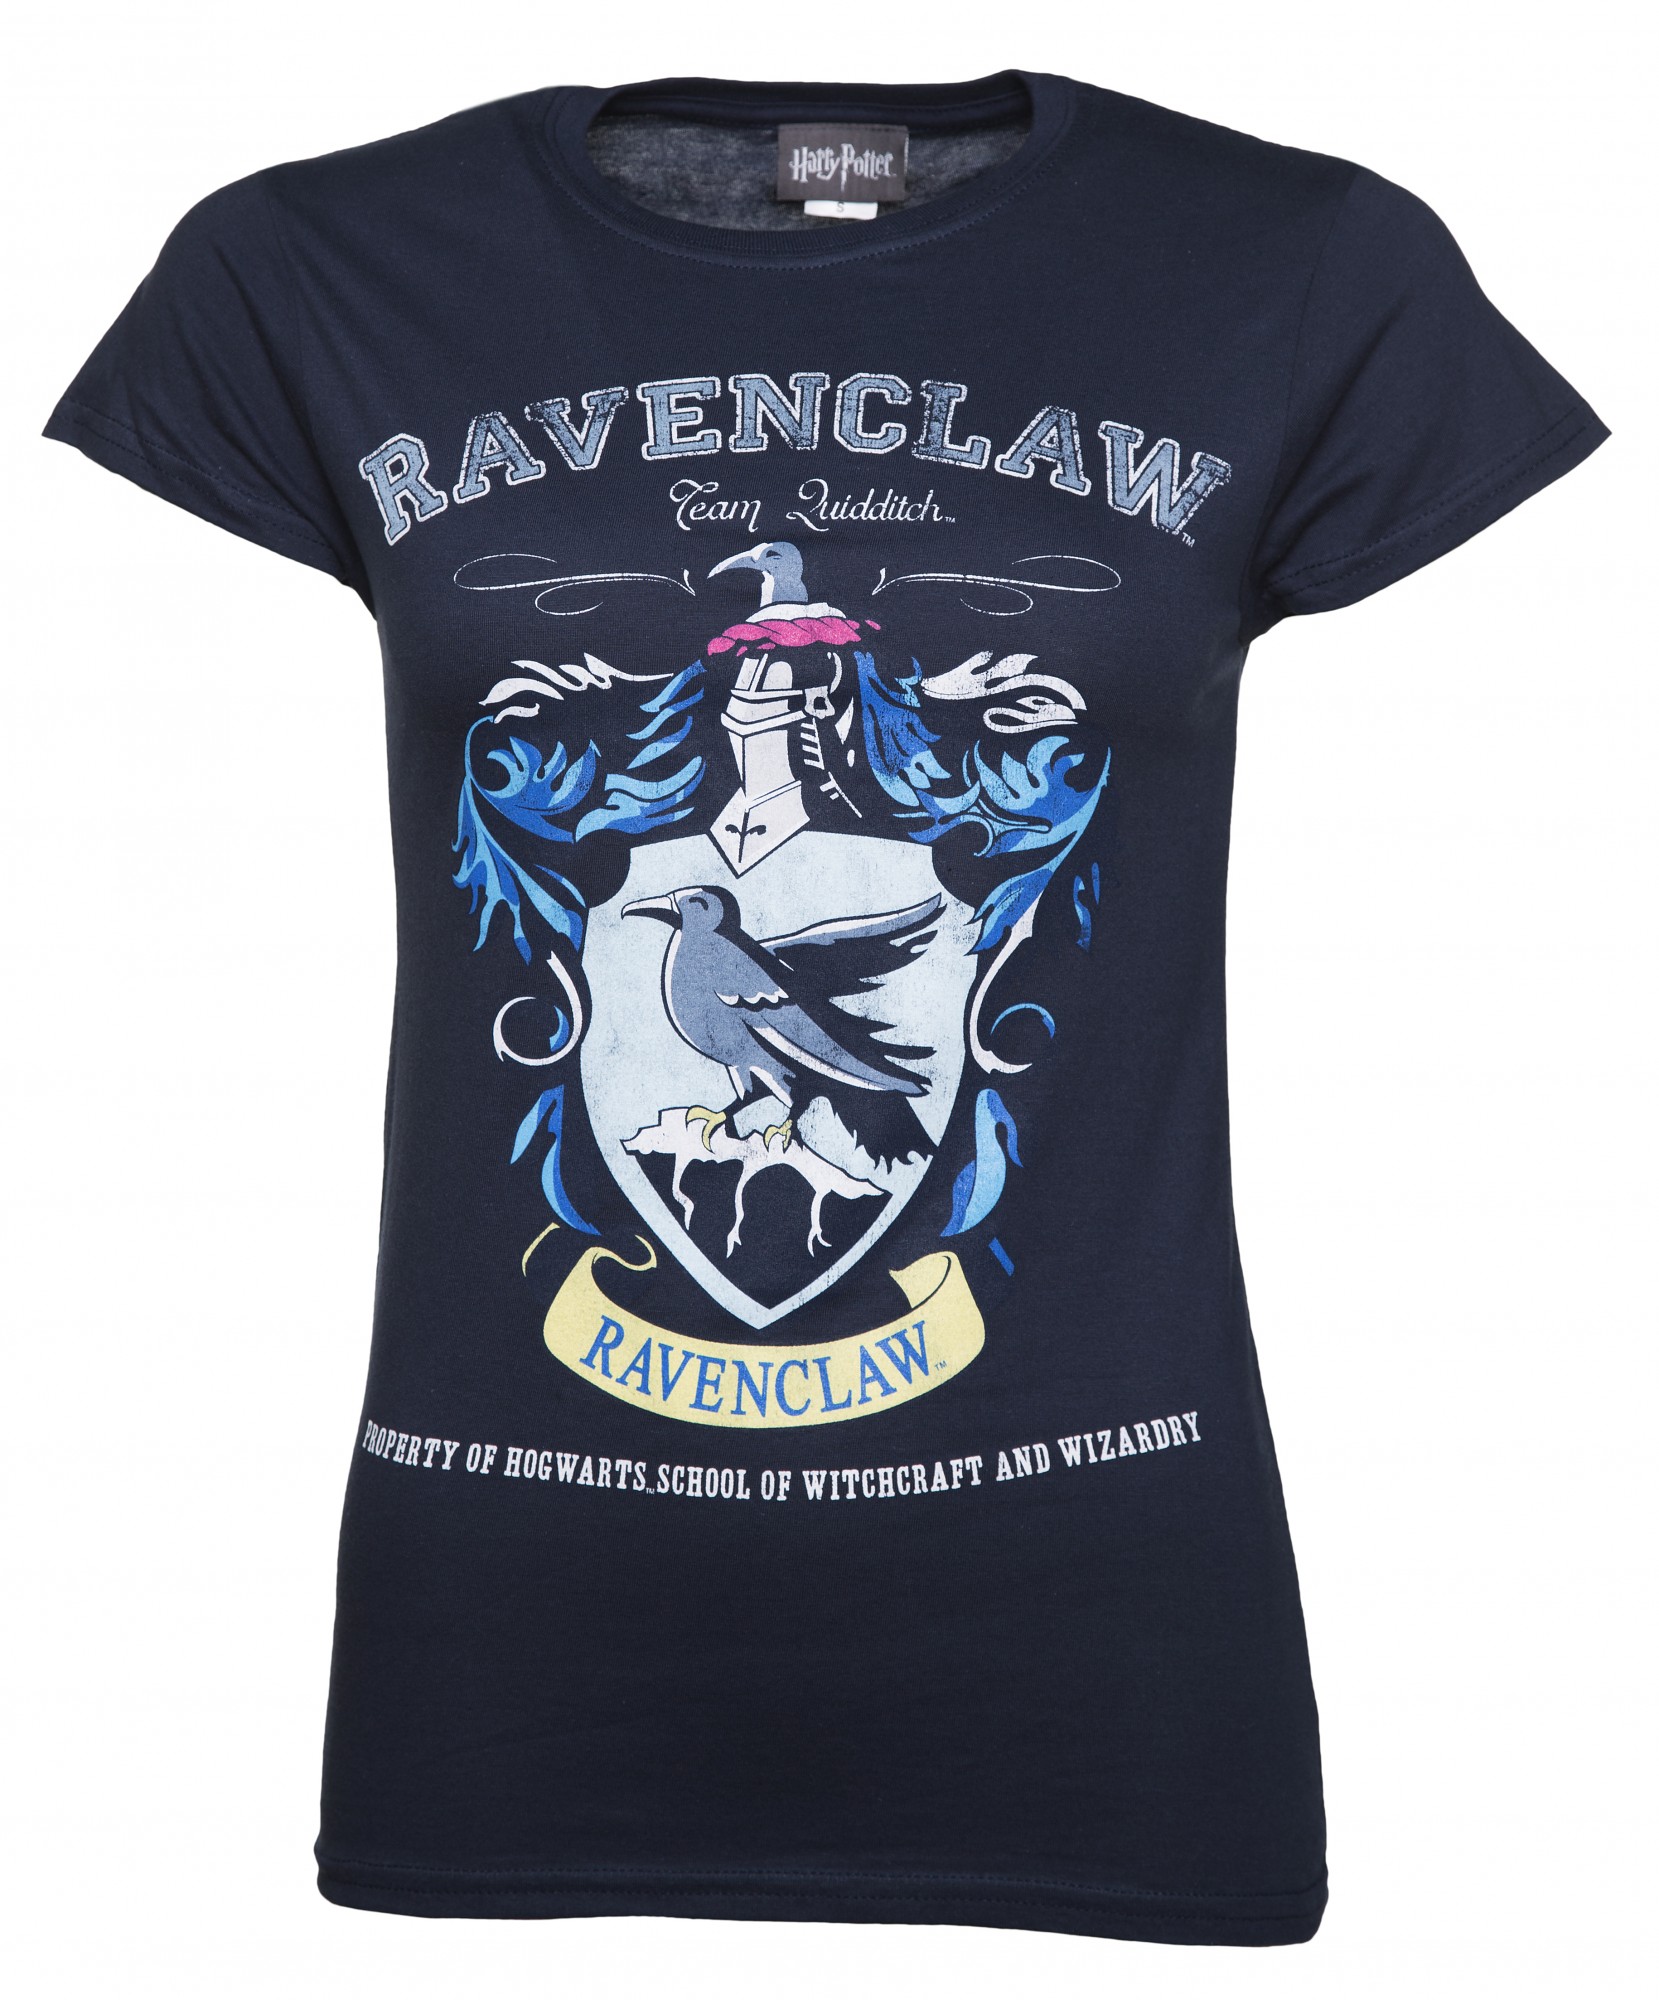 Women's Navy Harry Potter Ravenclaw Team Quidditch T-Shirt